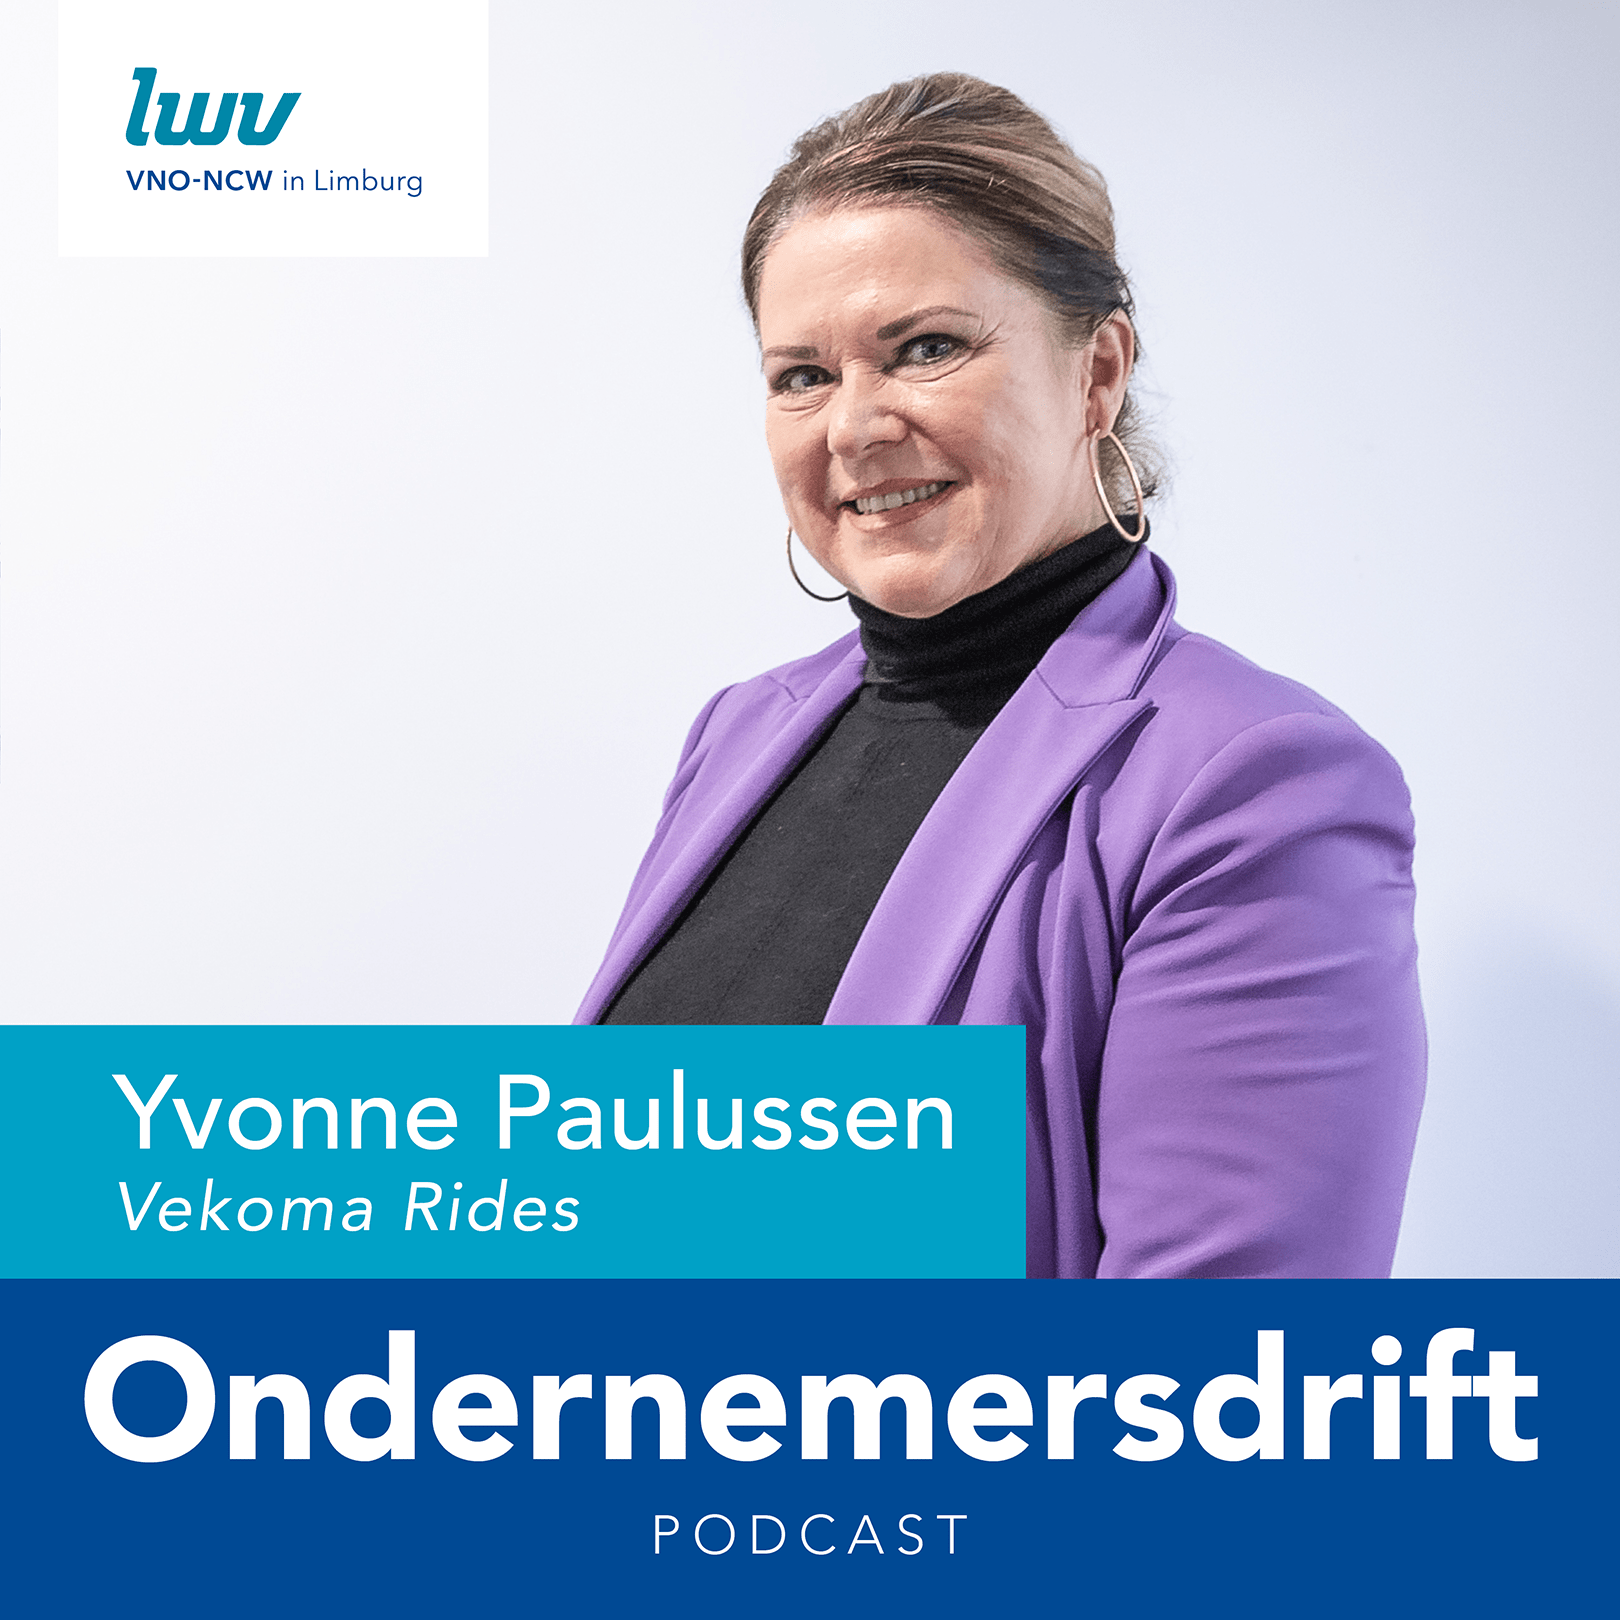 LWV-podcast met Yvonne Paulussen